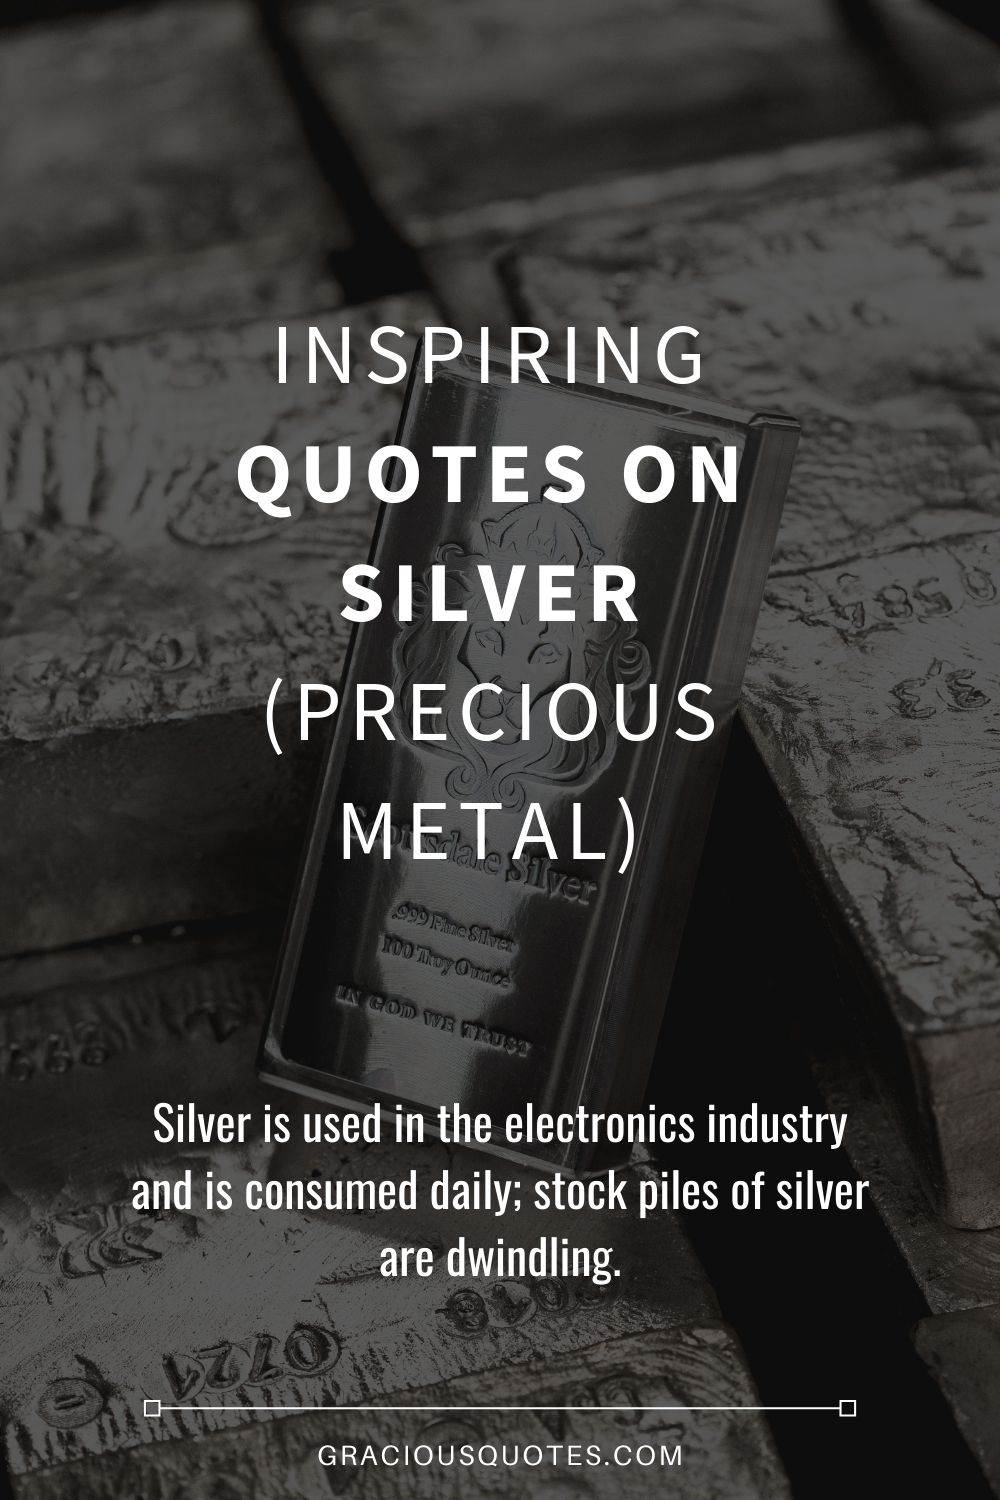 Inspiring Quotes on Silver (PRECIOUS METAL) - Gracious Quotes